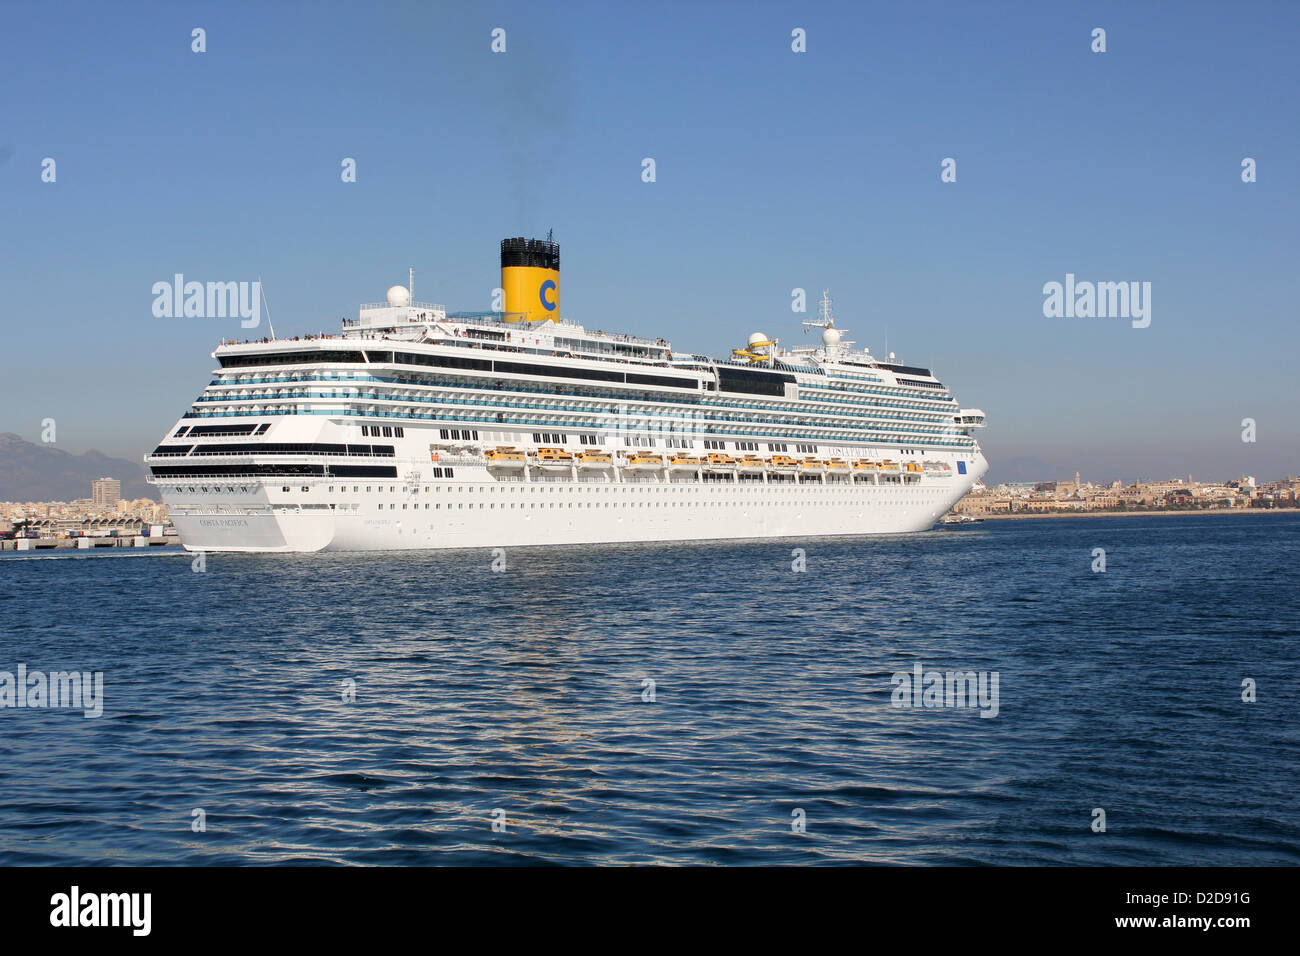 Costa Cruise Lines Kreuzfahrtschiff "Costa Pacifica" - Abfahrt Hafen von Palma De Mallorca / Mallorca. Stockfoto